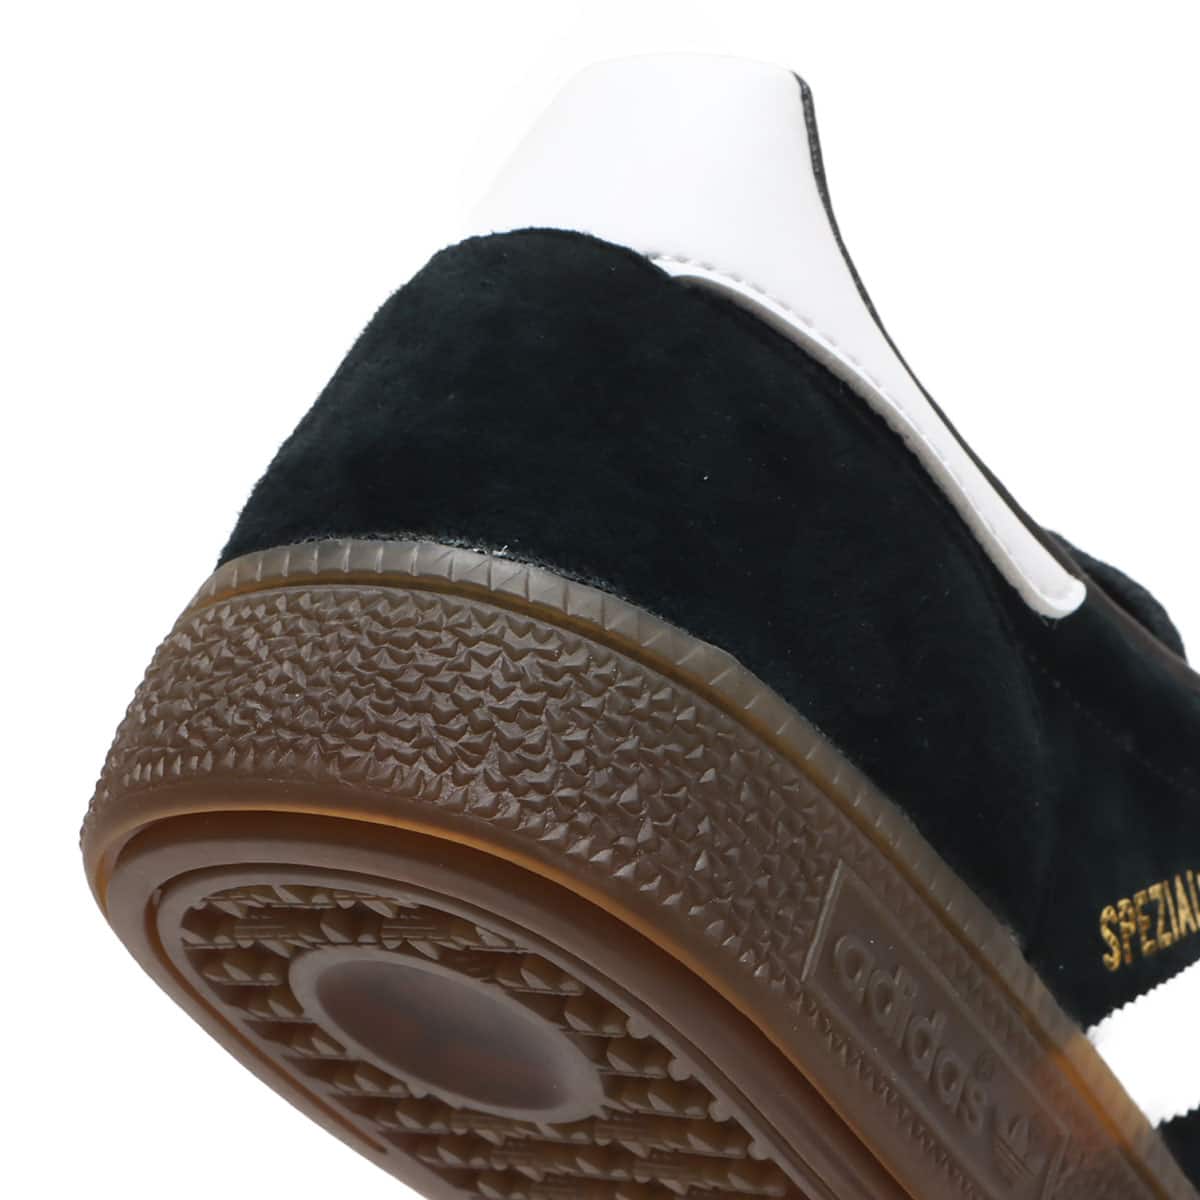 adidas HANDBALL SPEZIAL CORE BLACK/FOOTWEAR WHITE/GUM 23FW-S